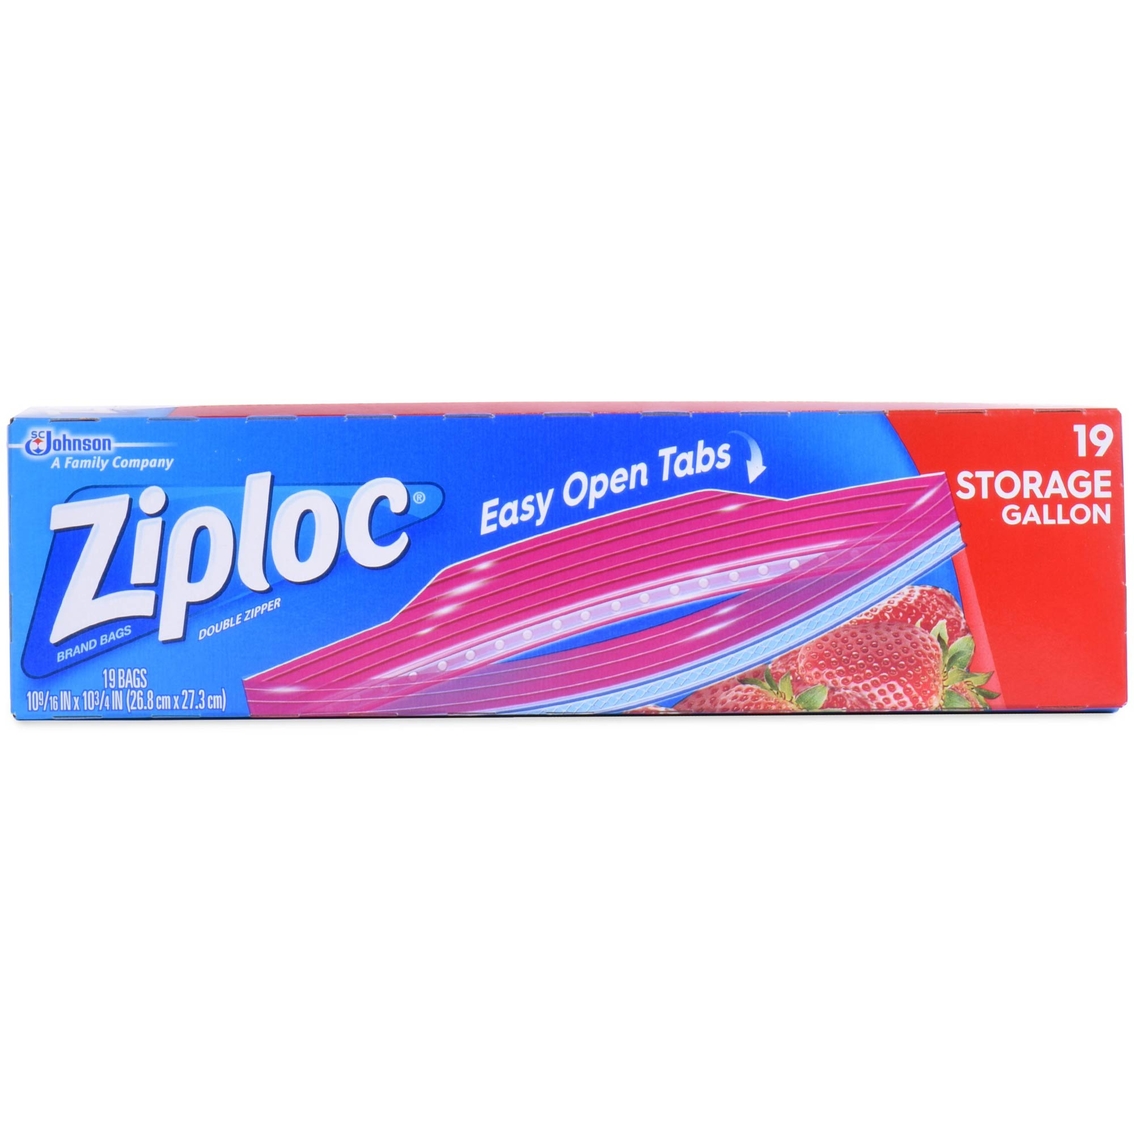 Ziploc Food Storage Bags Double Zipper Gallon - 19 ct box